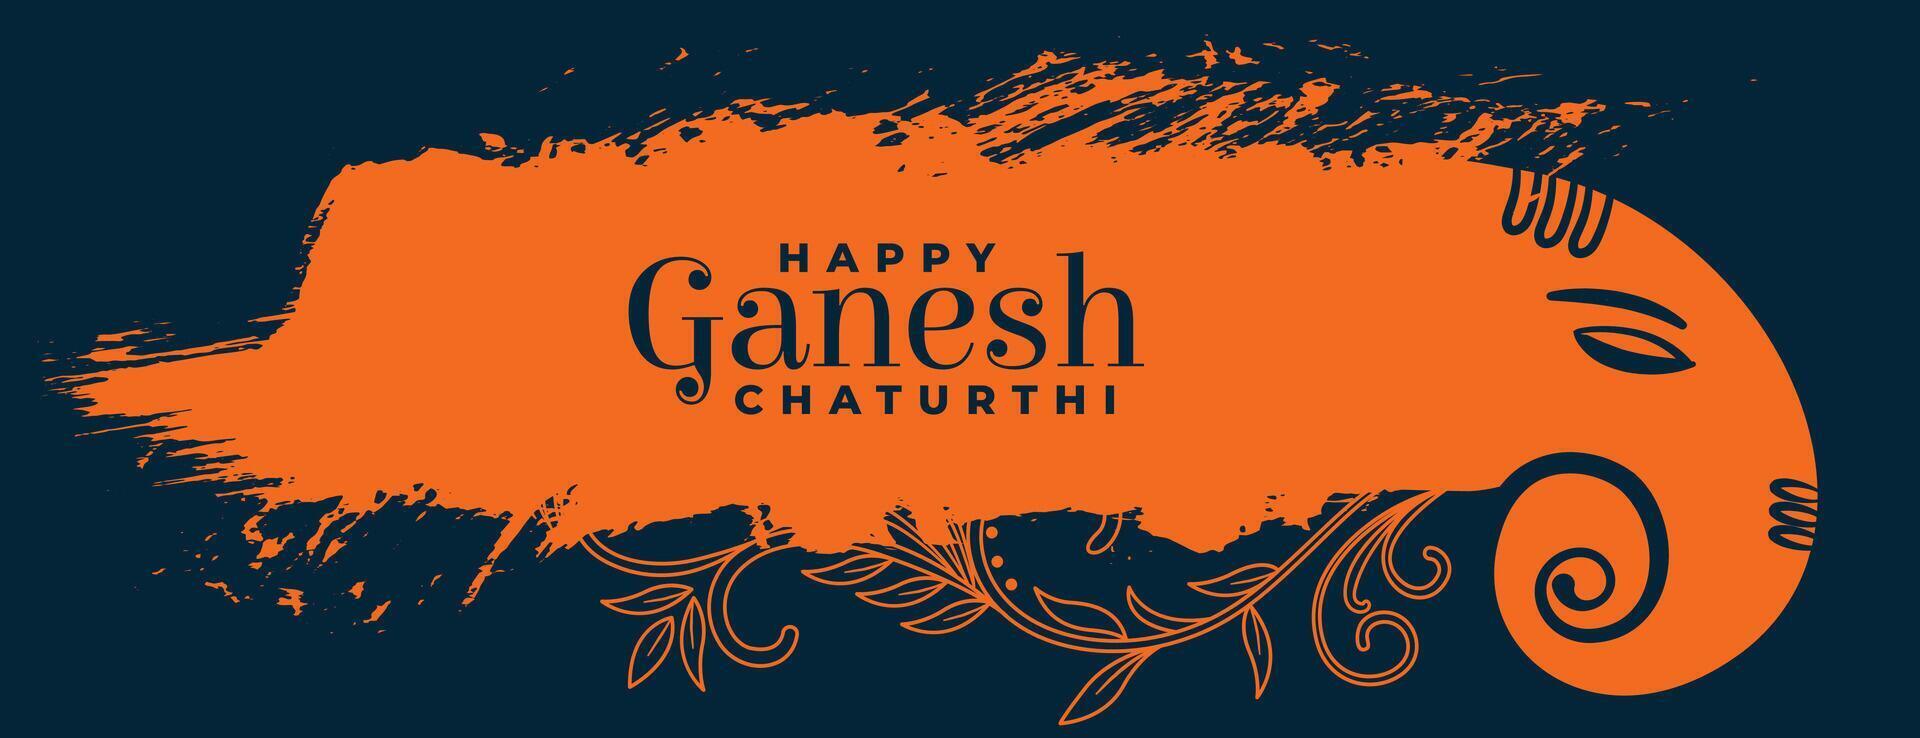 elegant heer ganesha ontwerp voor ganesh chaturthi festival vector